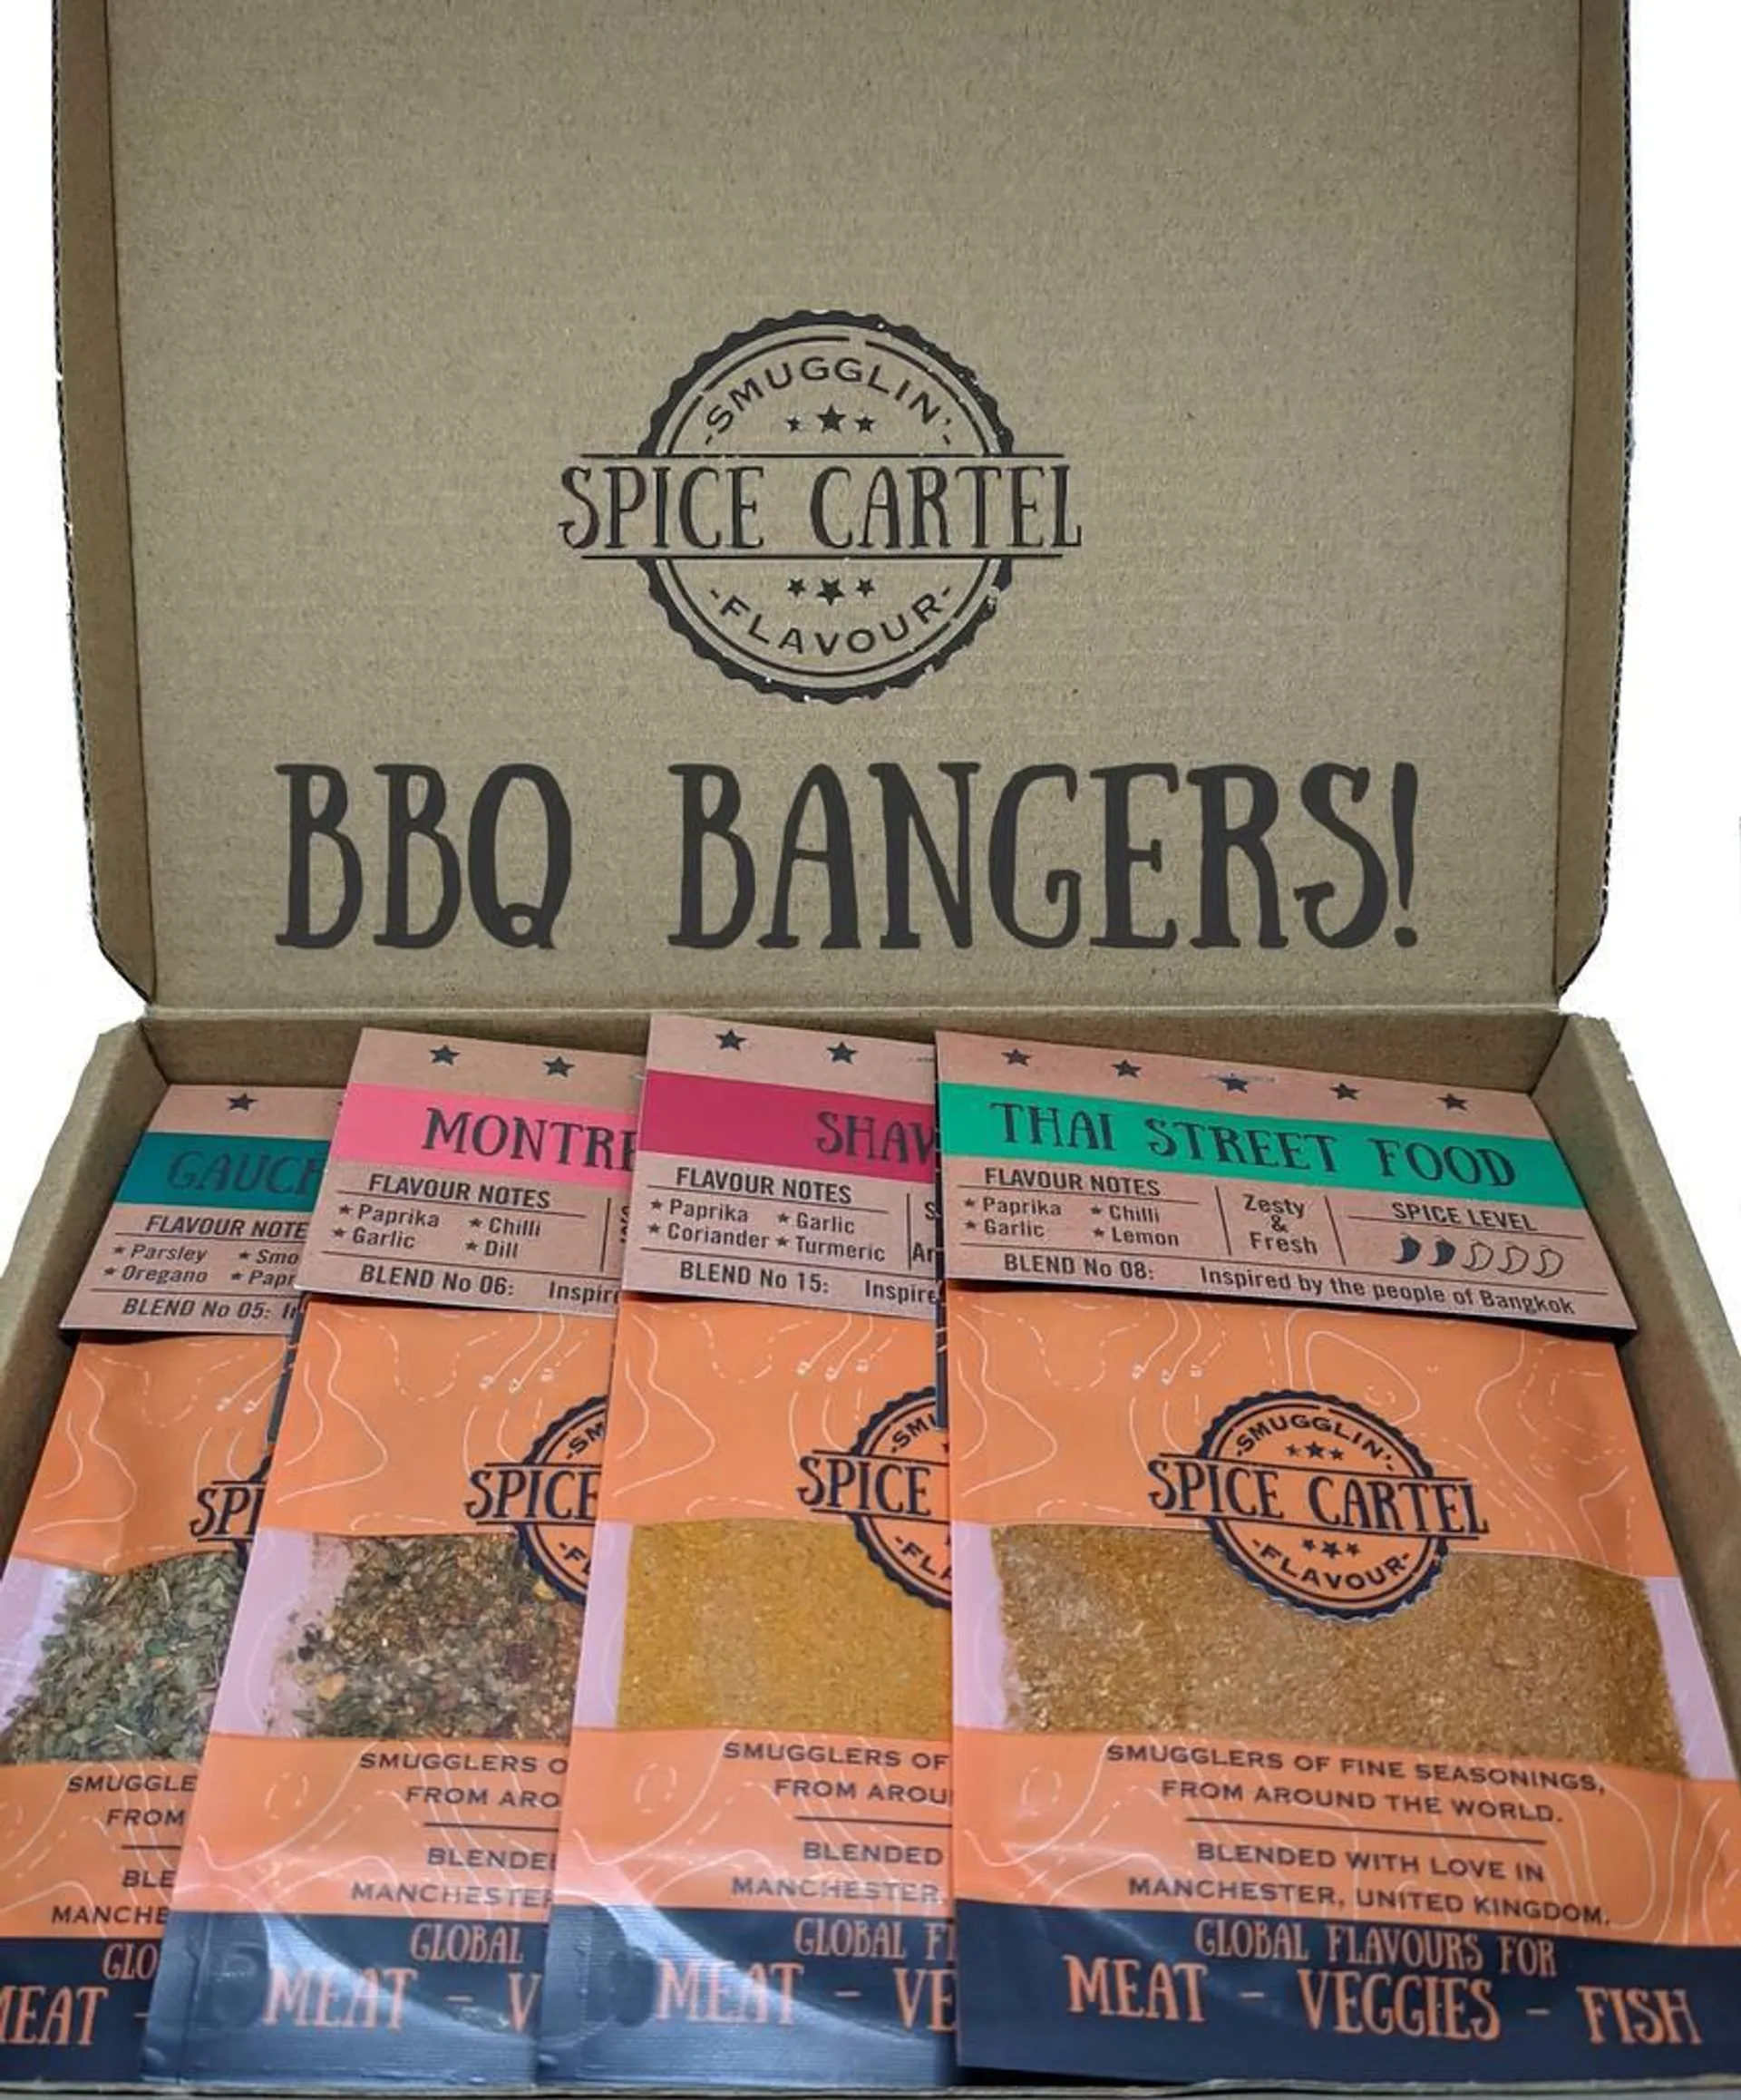 Spice Cartel's ' BBQ Bangers' Spice Rub Gift Box